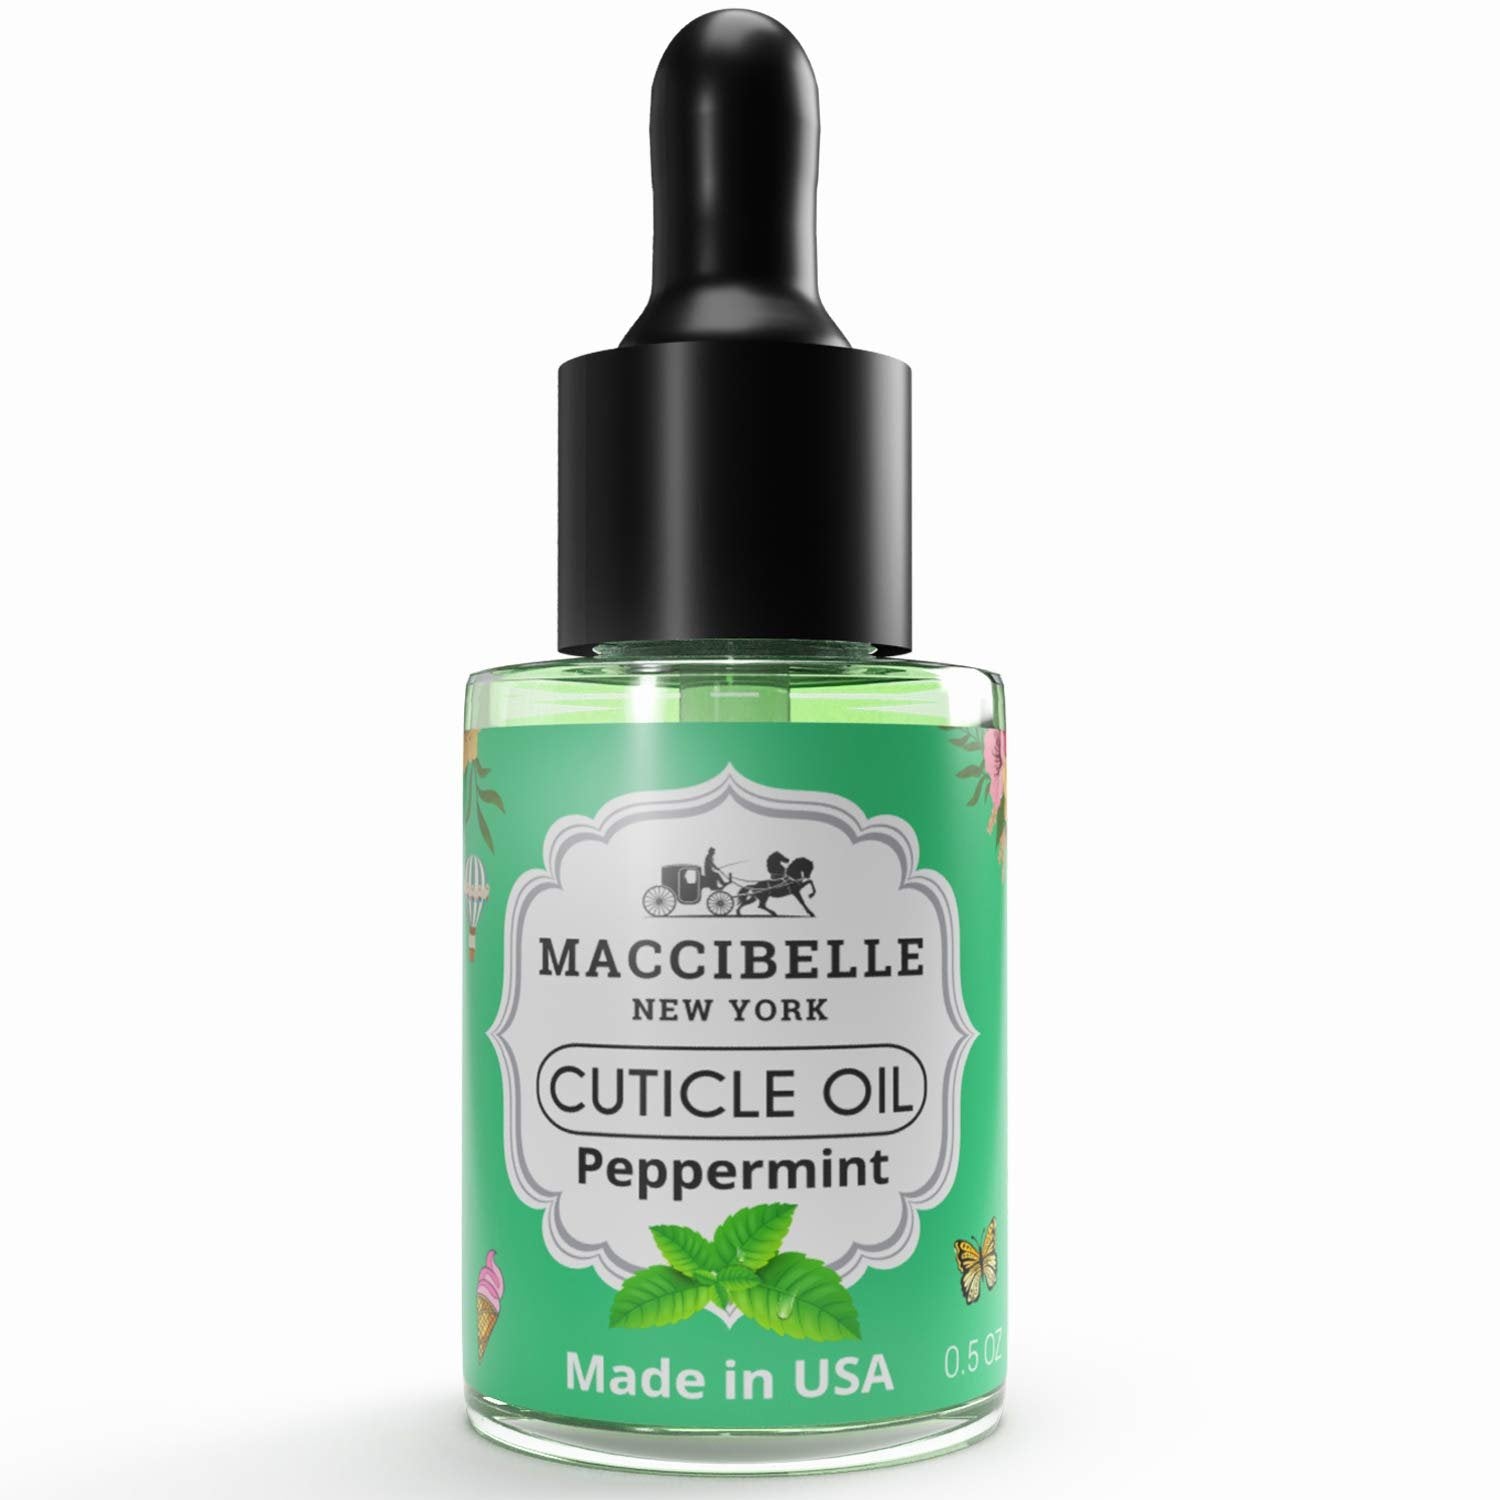 Maccibelle Cuticle Oil 0.5 oz Tea Tree Lavender Heals Dry Cracked Cuticles